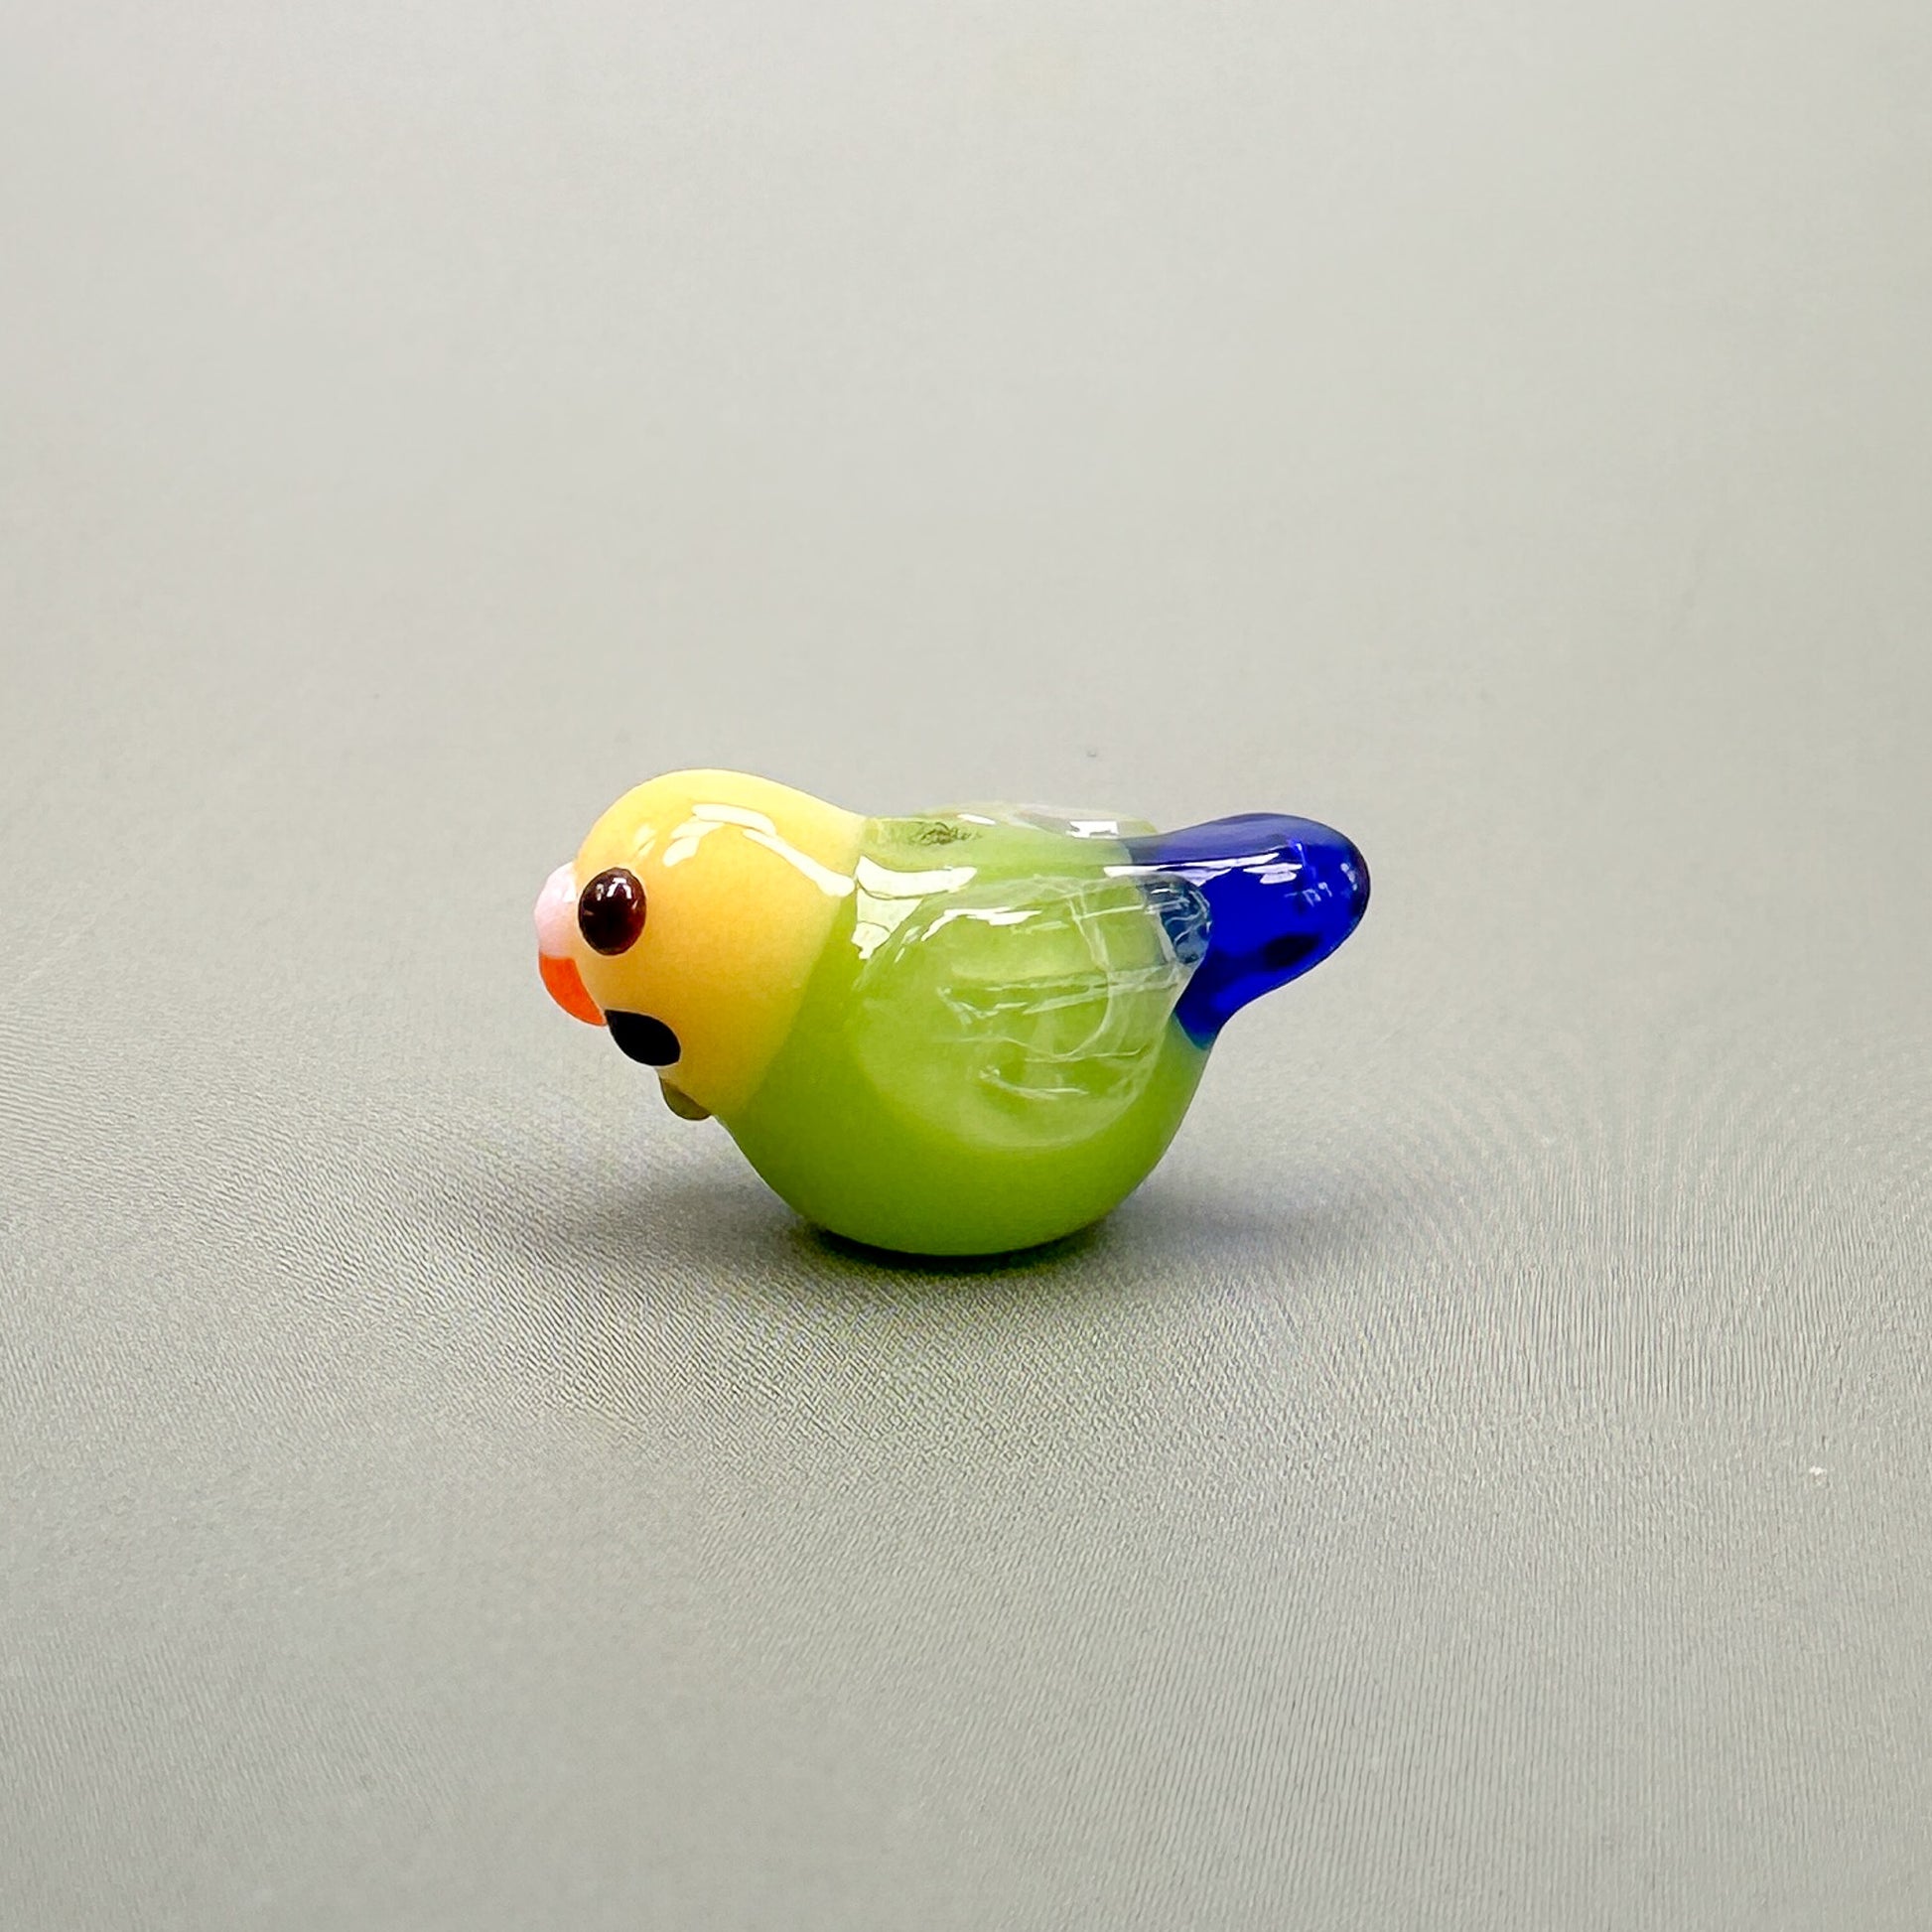 Chibi Handmade Glass Beads - Budgerigar (Budgie) - 1 pc.-The Bead Gallery Honolulu